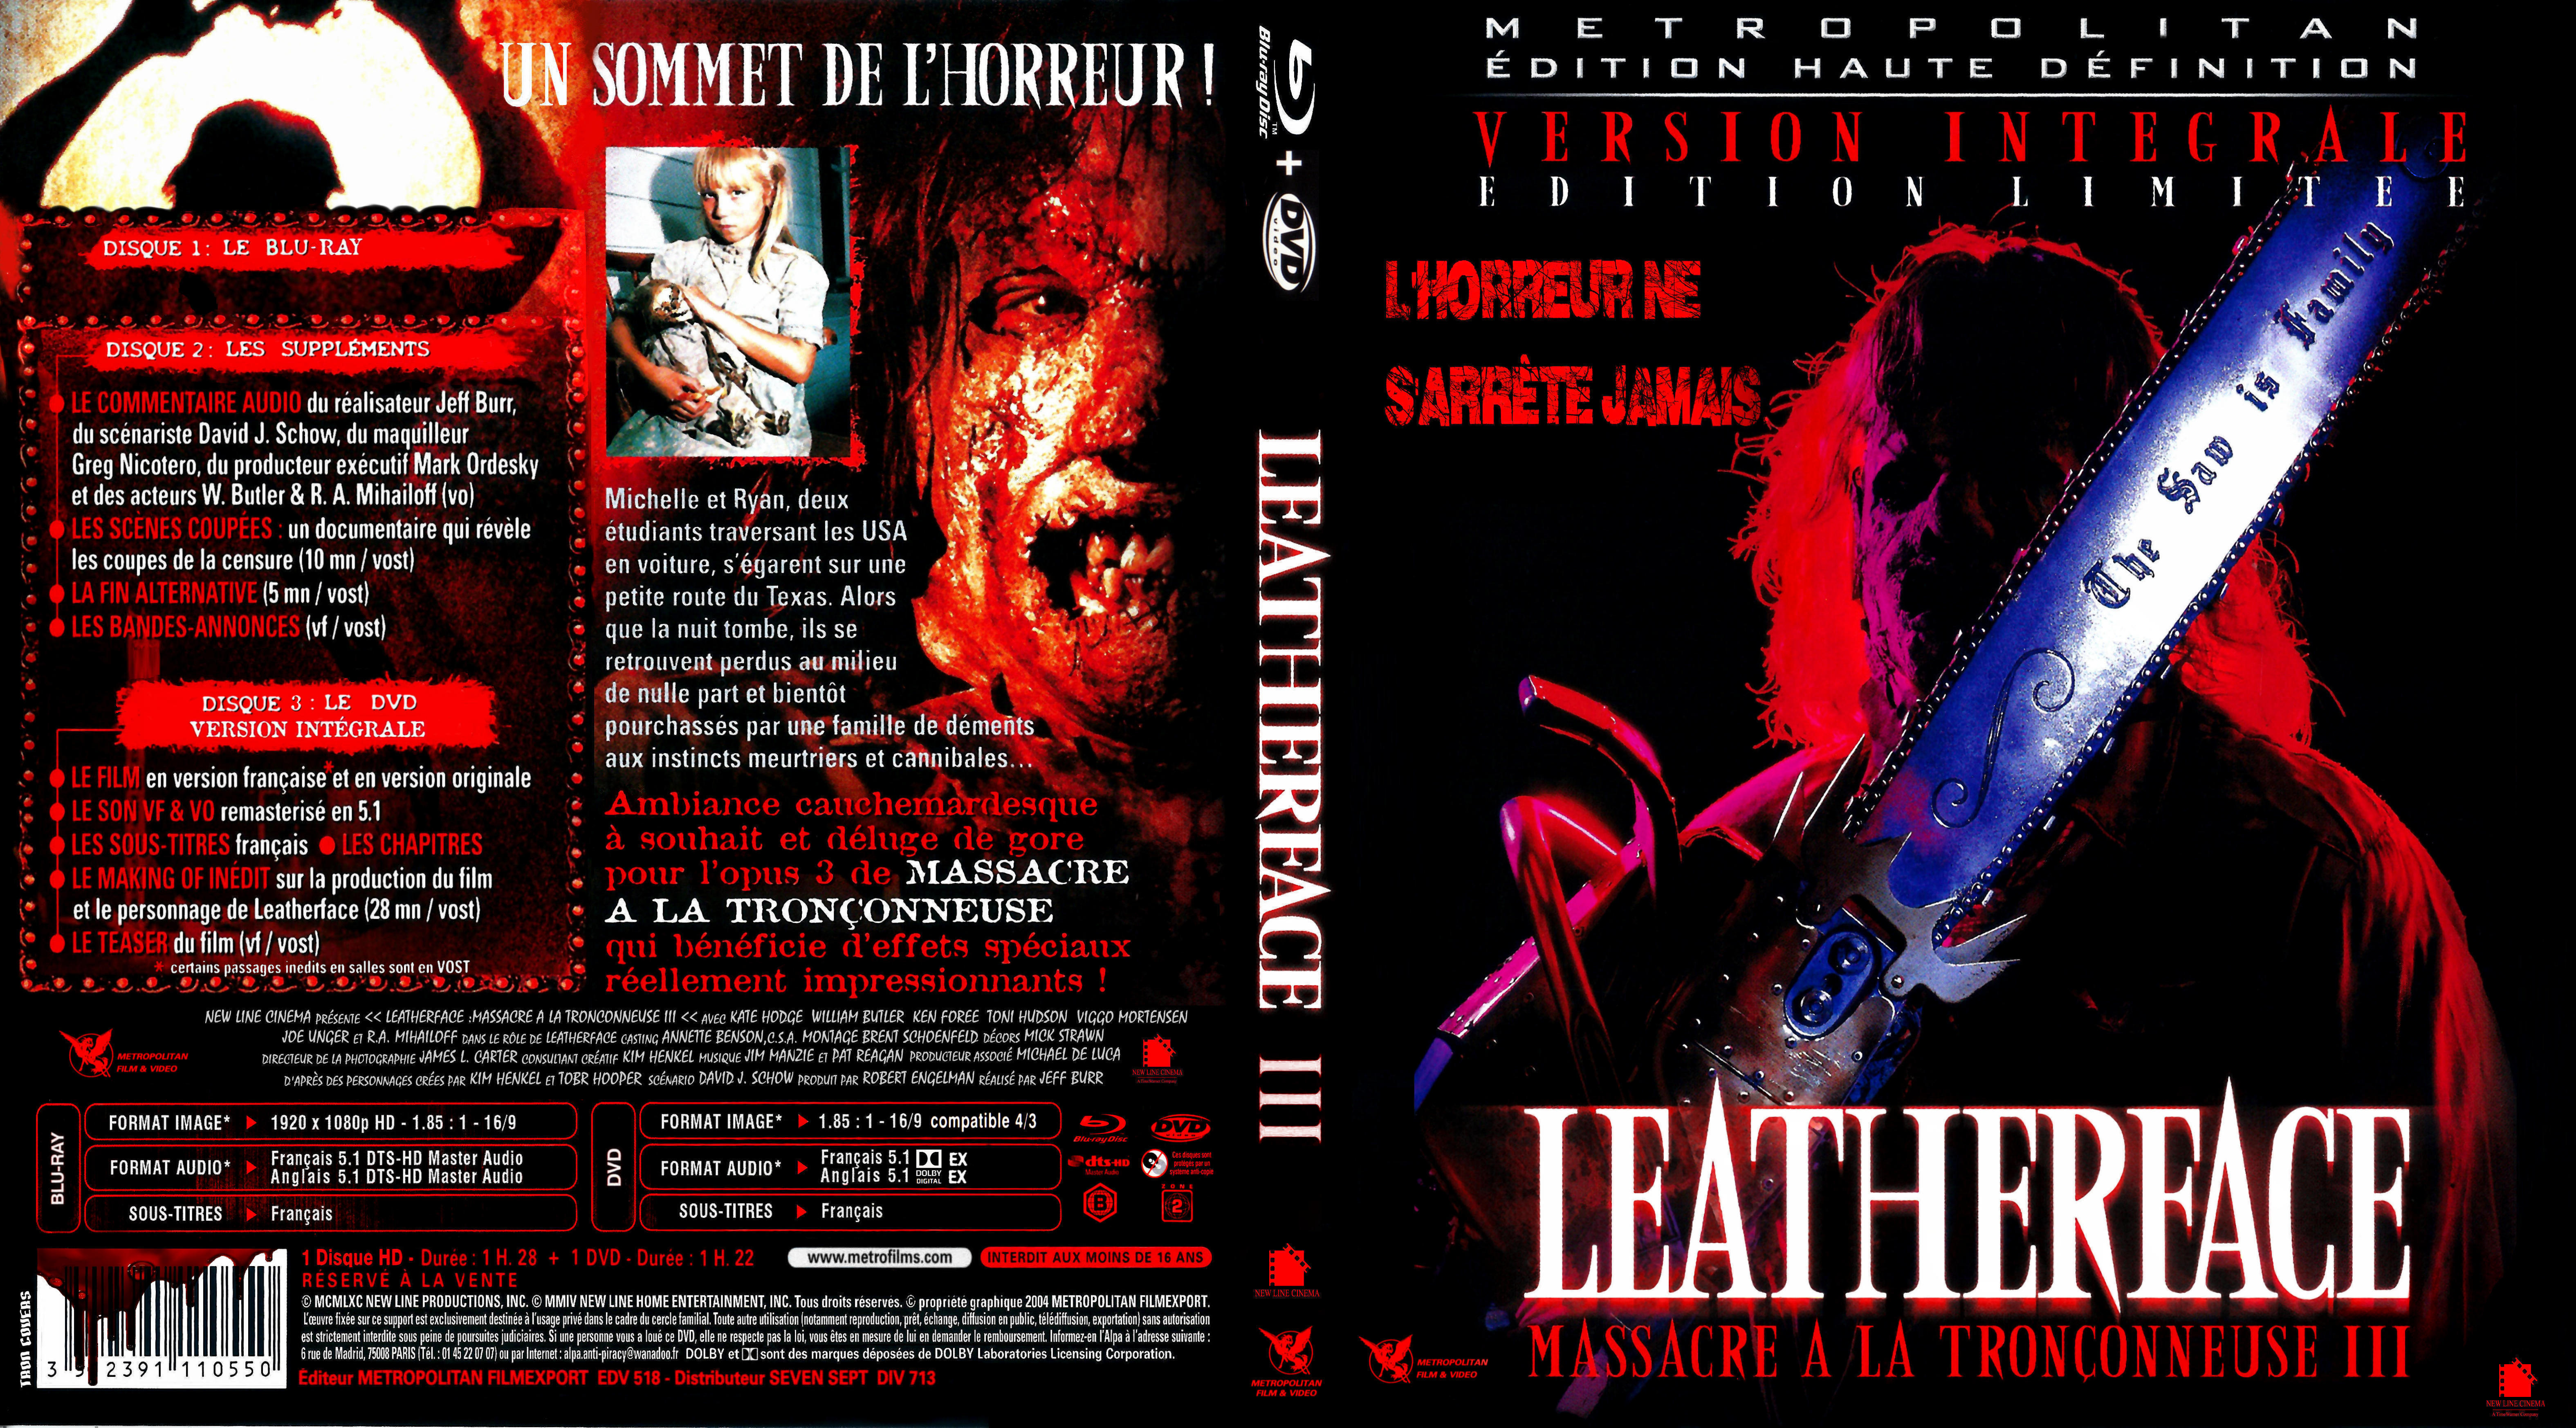 Jaquette DVD Leatherface 3 massacre  la tronconneuse 3 custom (BLU-RAY) 